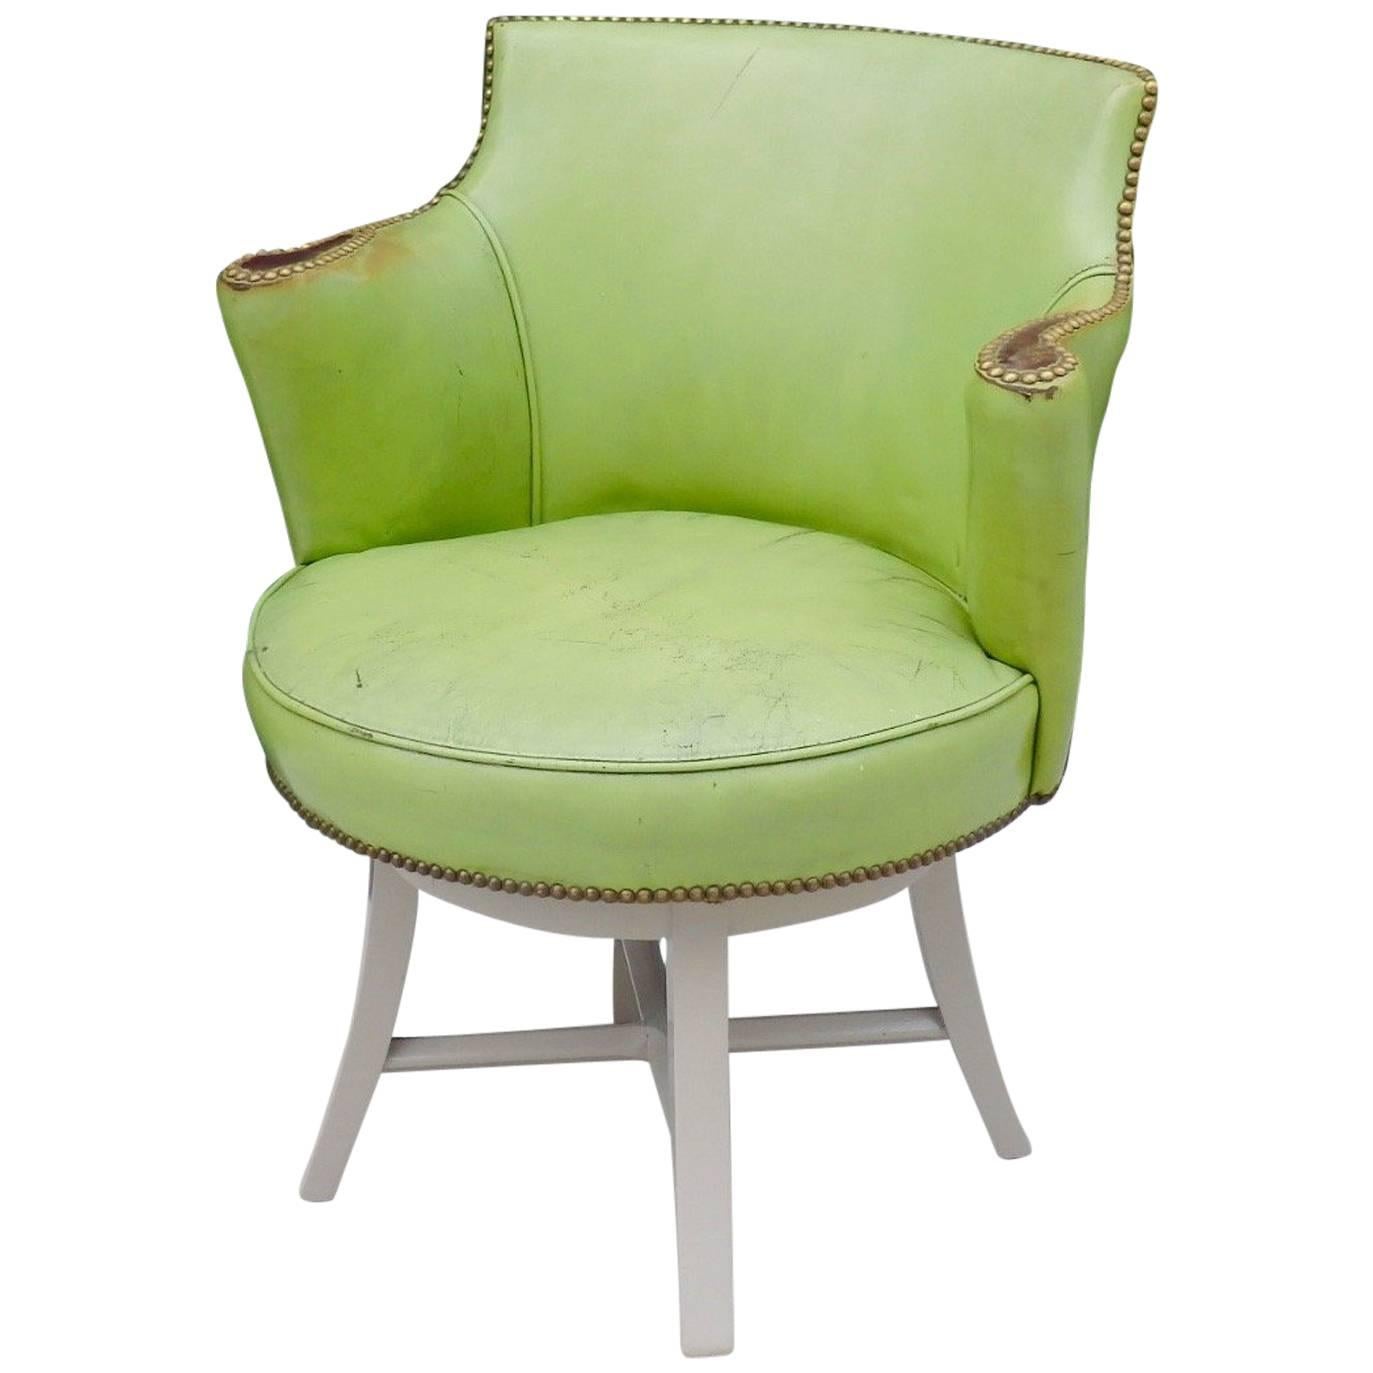 Worn Apple Green Art Deco Swivel Chair